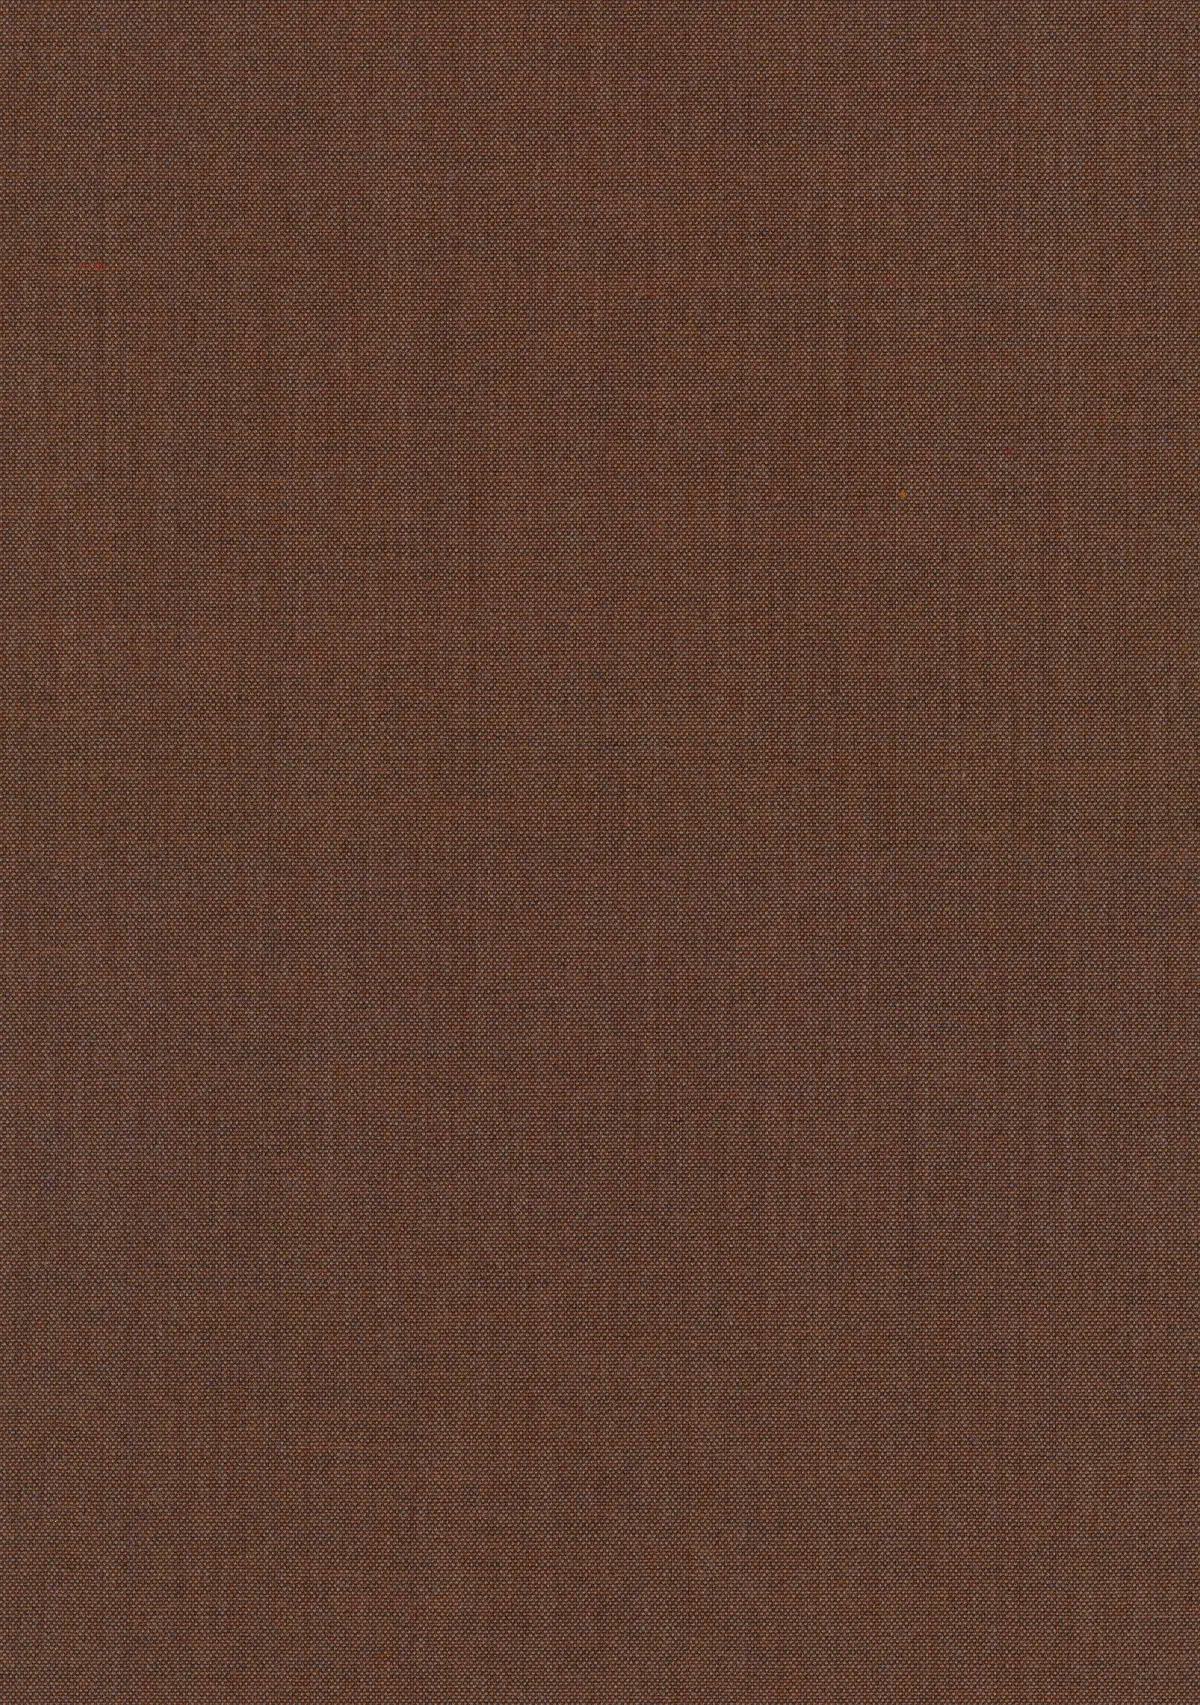 Fabric sample Remix 3 346 brown